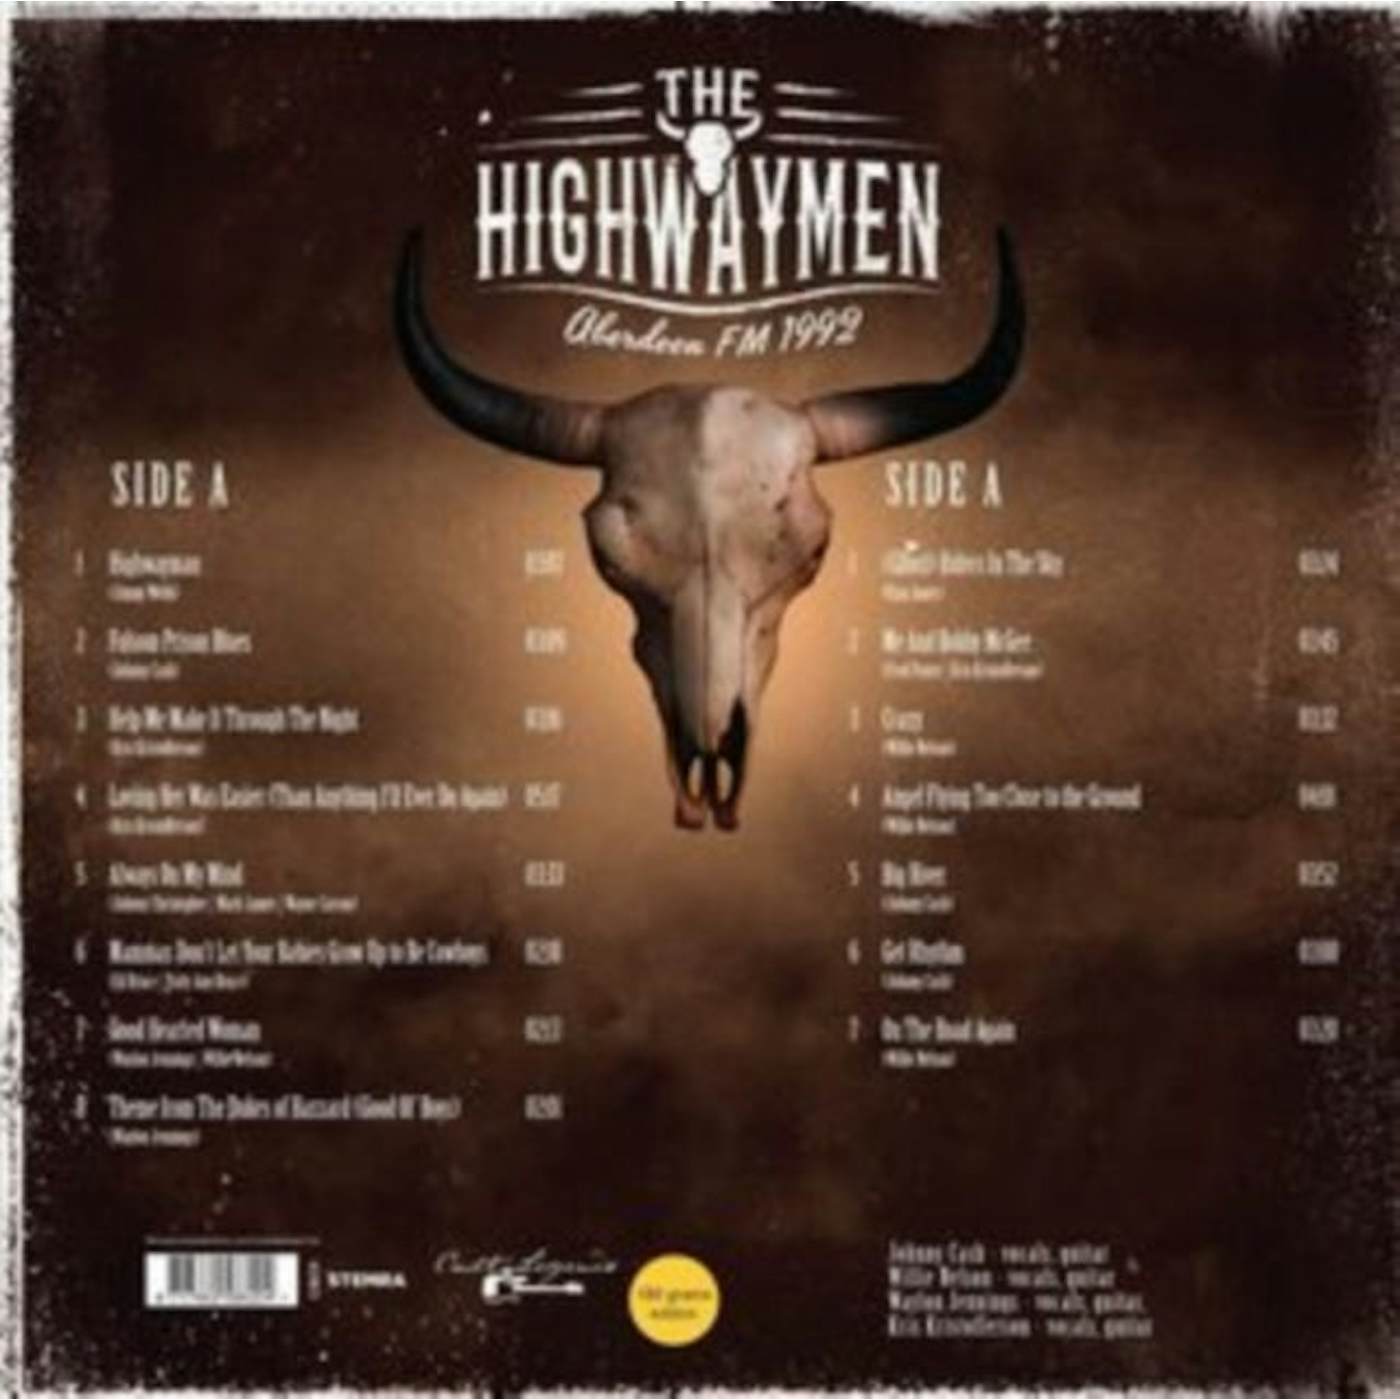 The Highwaymen LP Vinyl Record - Aberdeen FM 1992